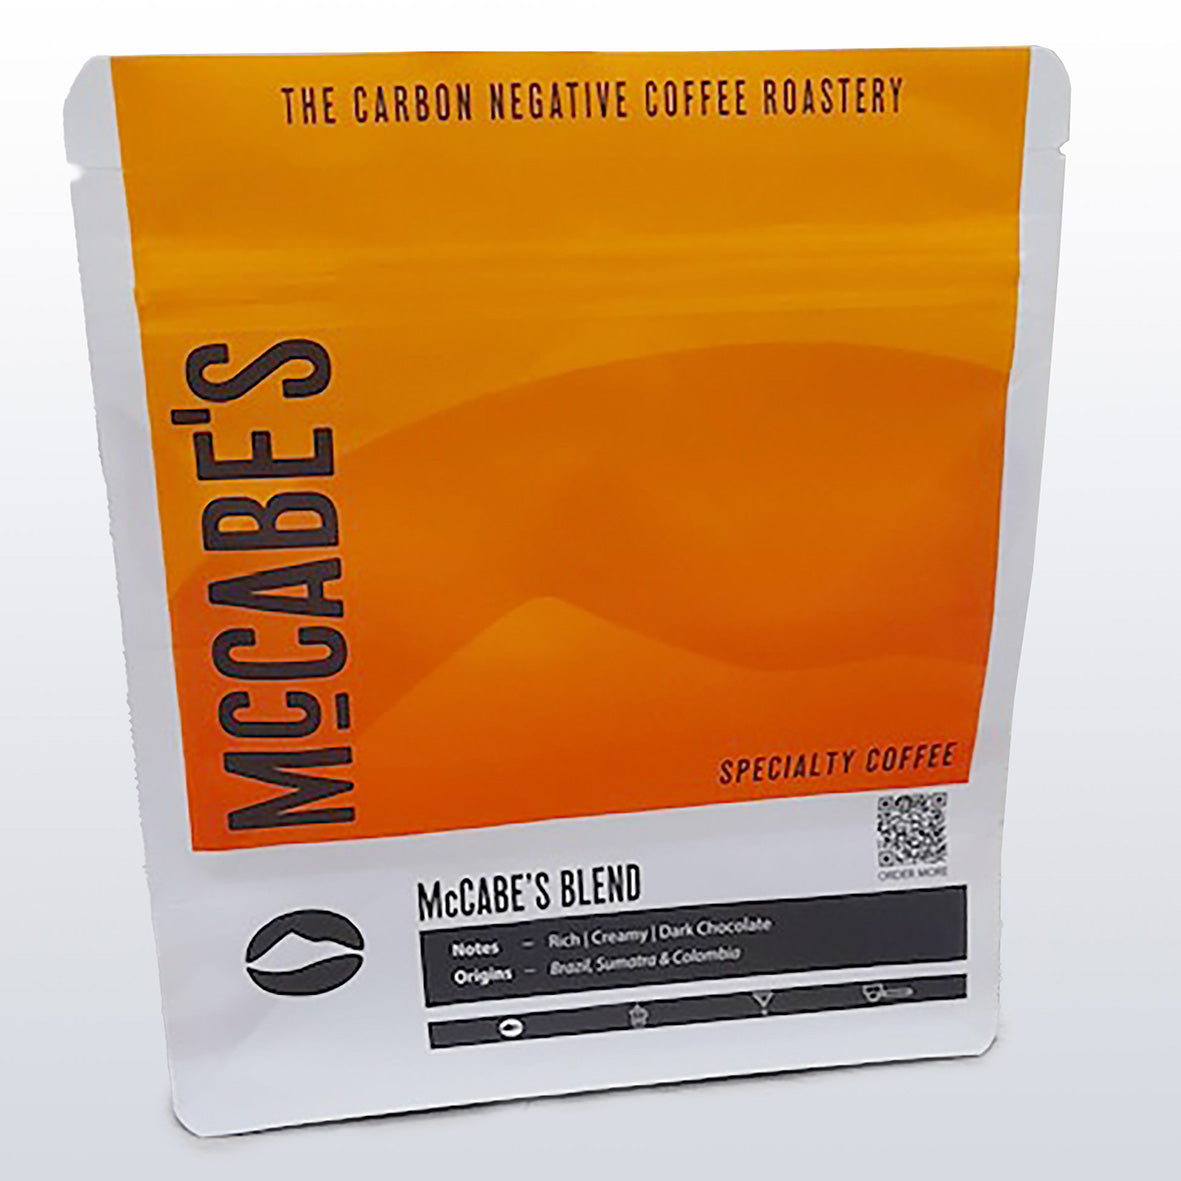 McCabe's Blend - Most Popular Coffee